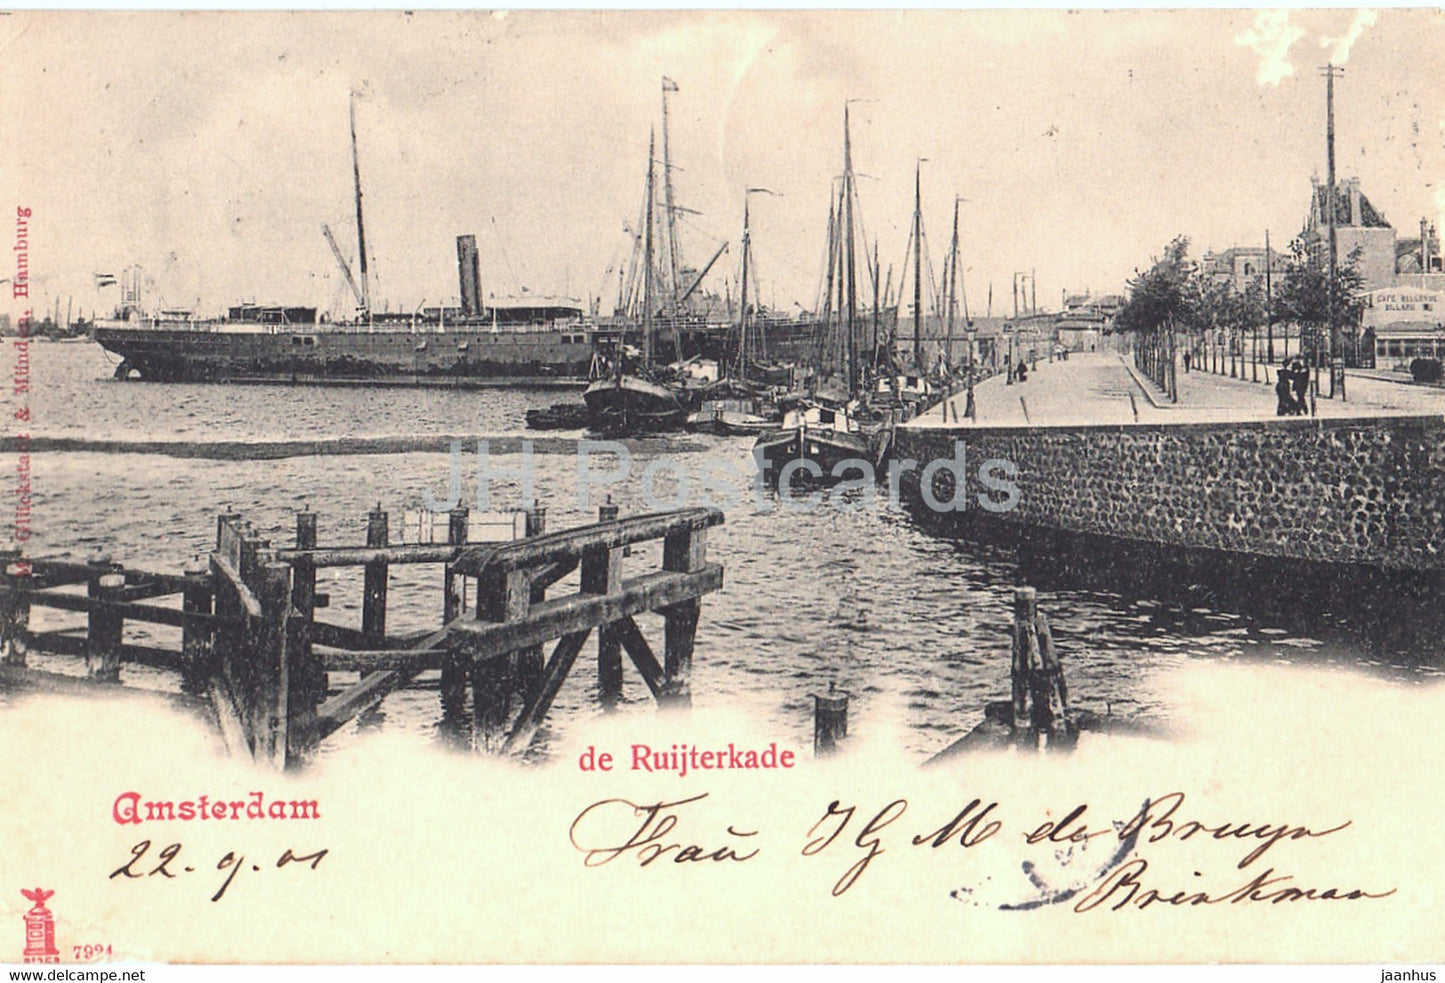 Amsterdam - de Ruijterkade - ship - old postcard - 1901 - Netherlands - used - JH Postcards